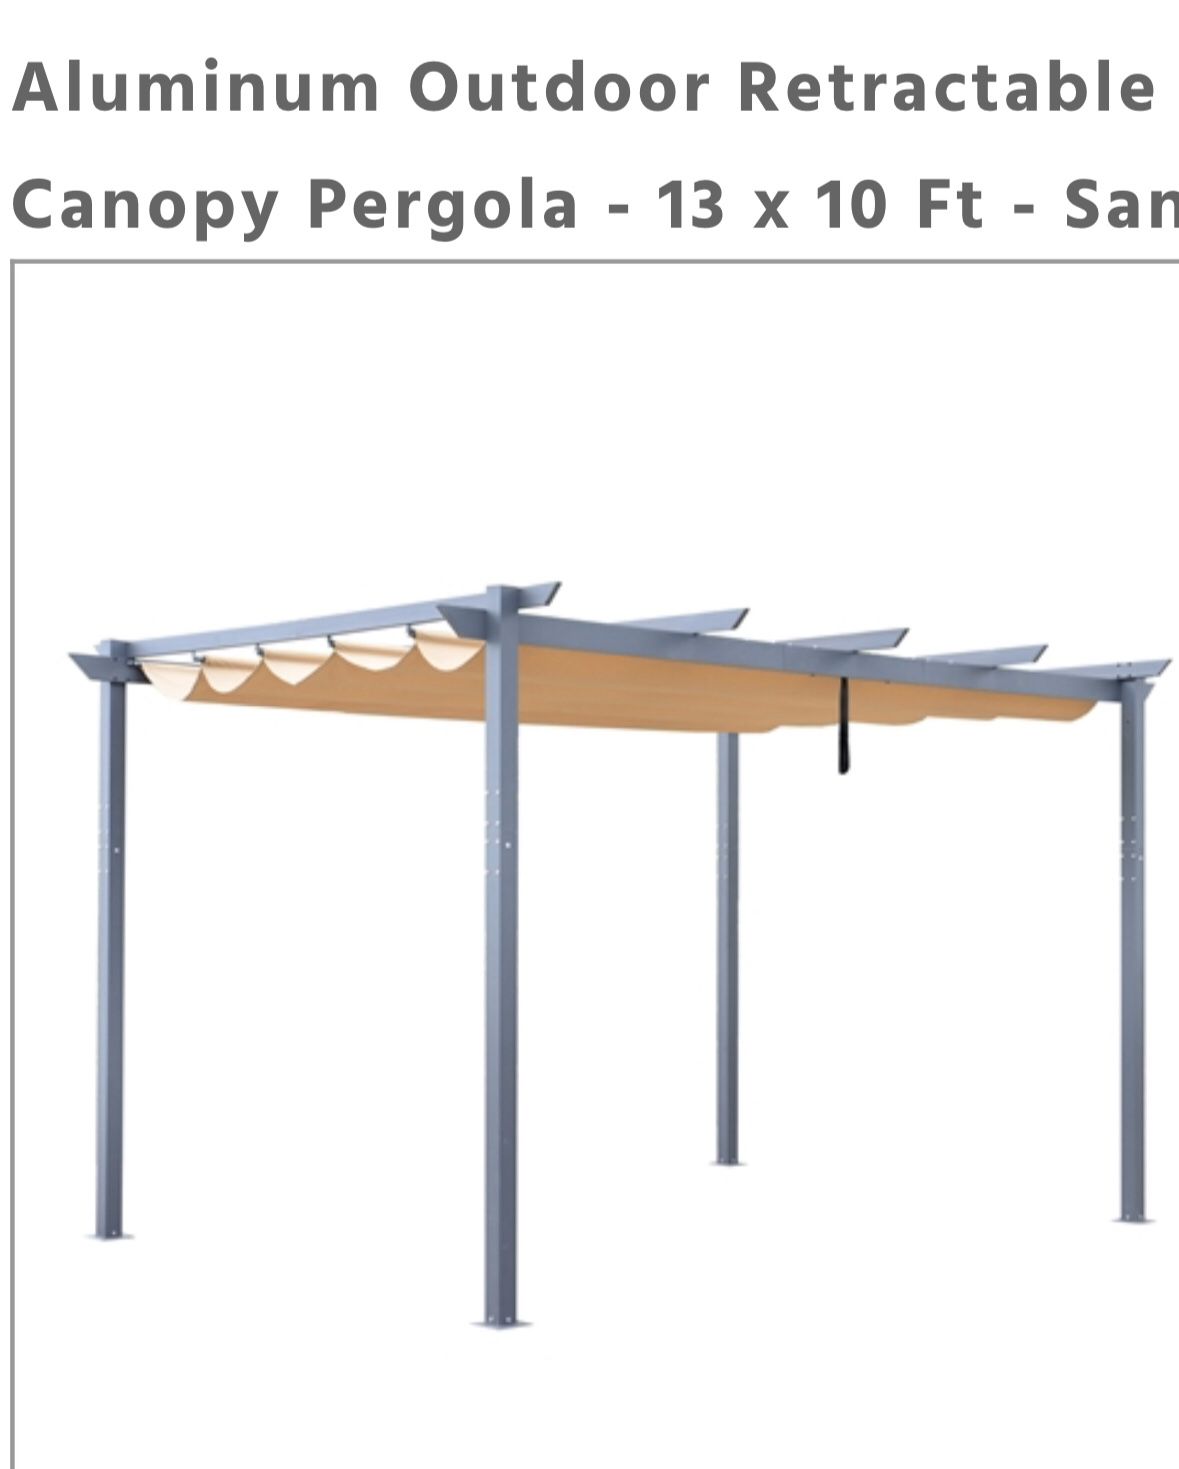 Canopy Pergola aluminum 13.1 x 9.7 x 7.9 Feet Color: Sand